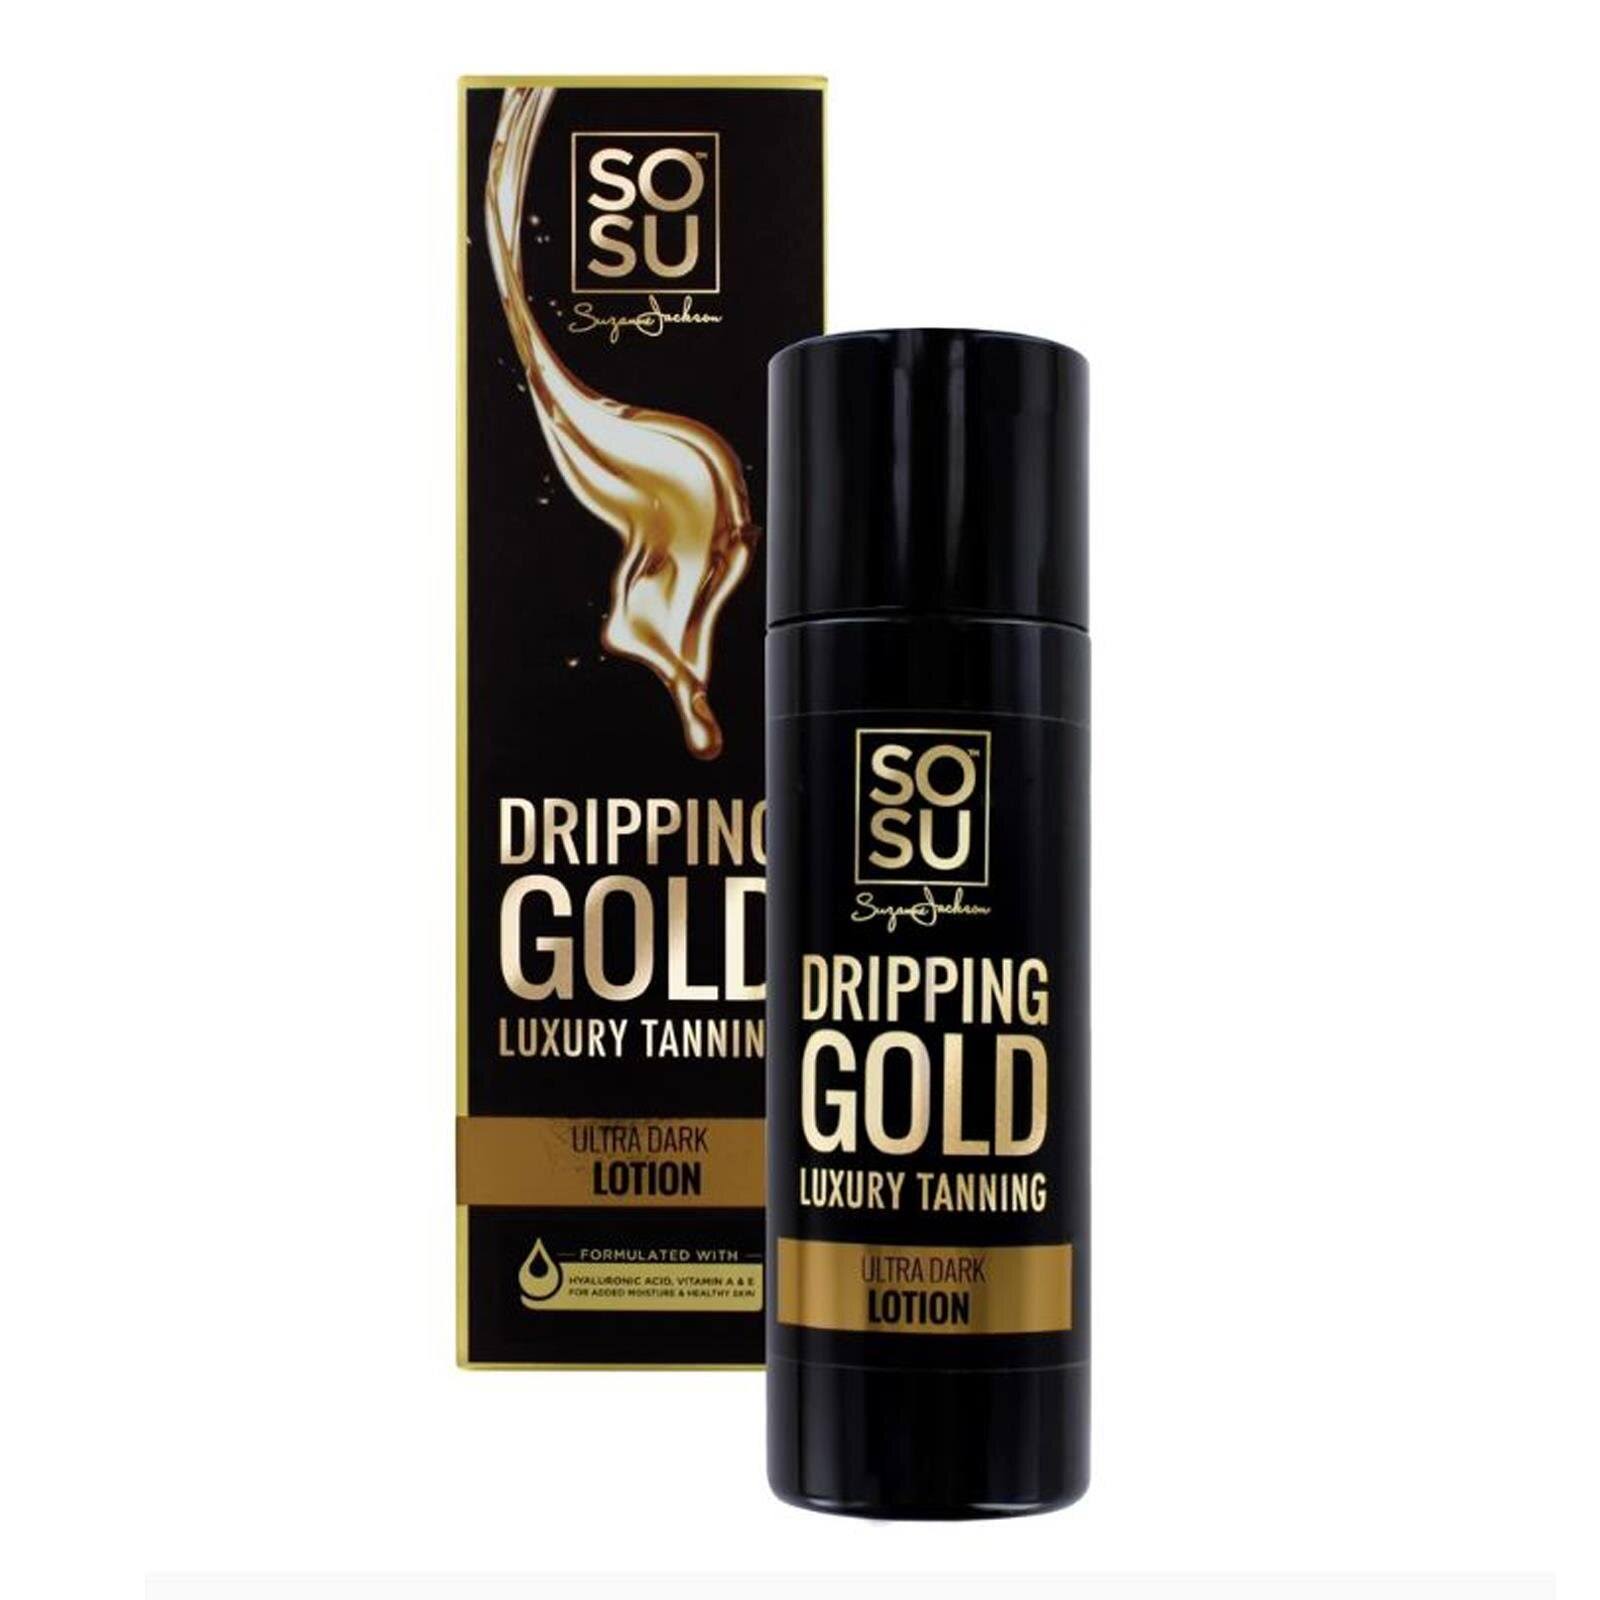 SOSU by SJ Dripping Gold Luxury Tanning Lotion - Ultra Dark